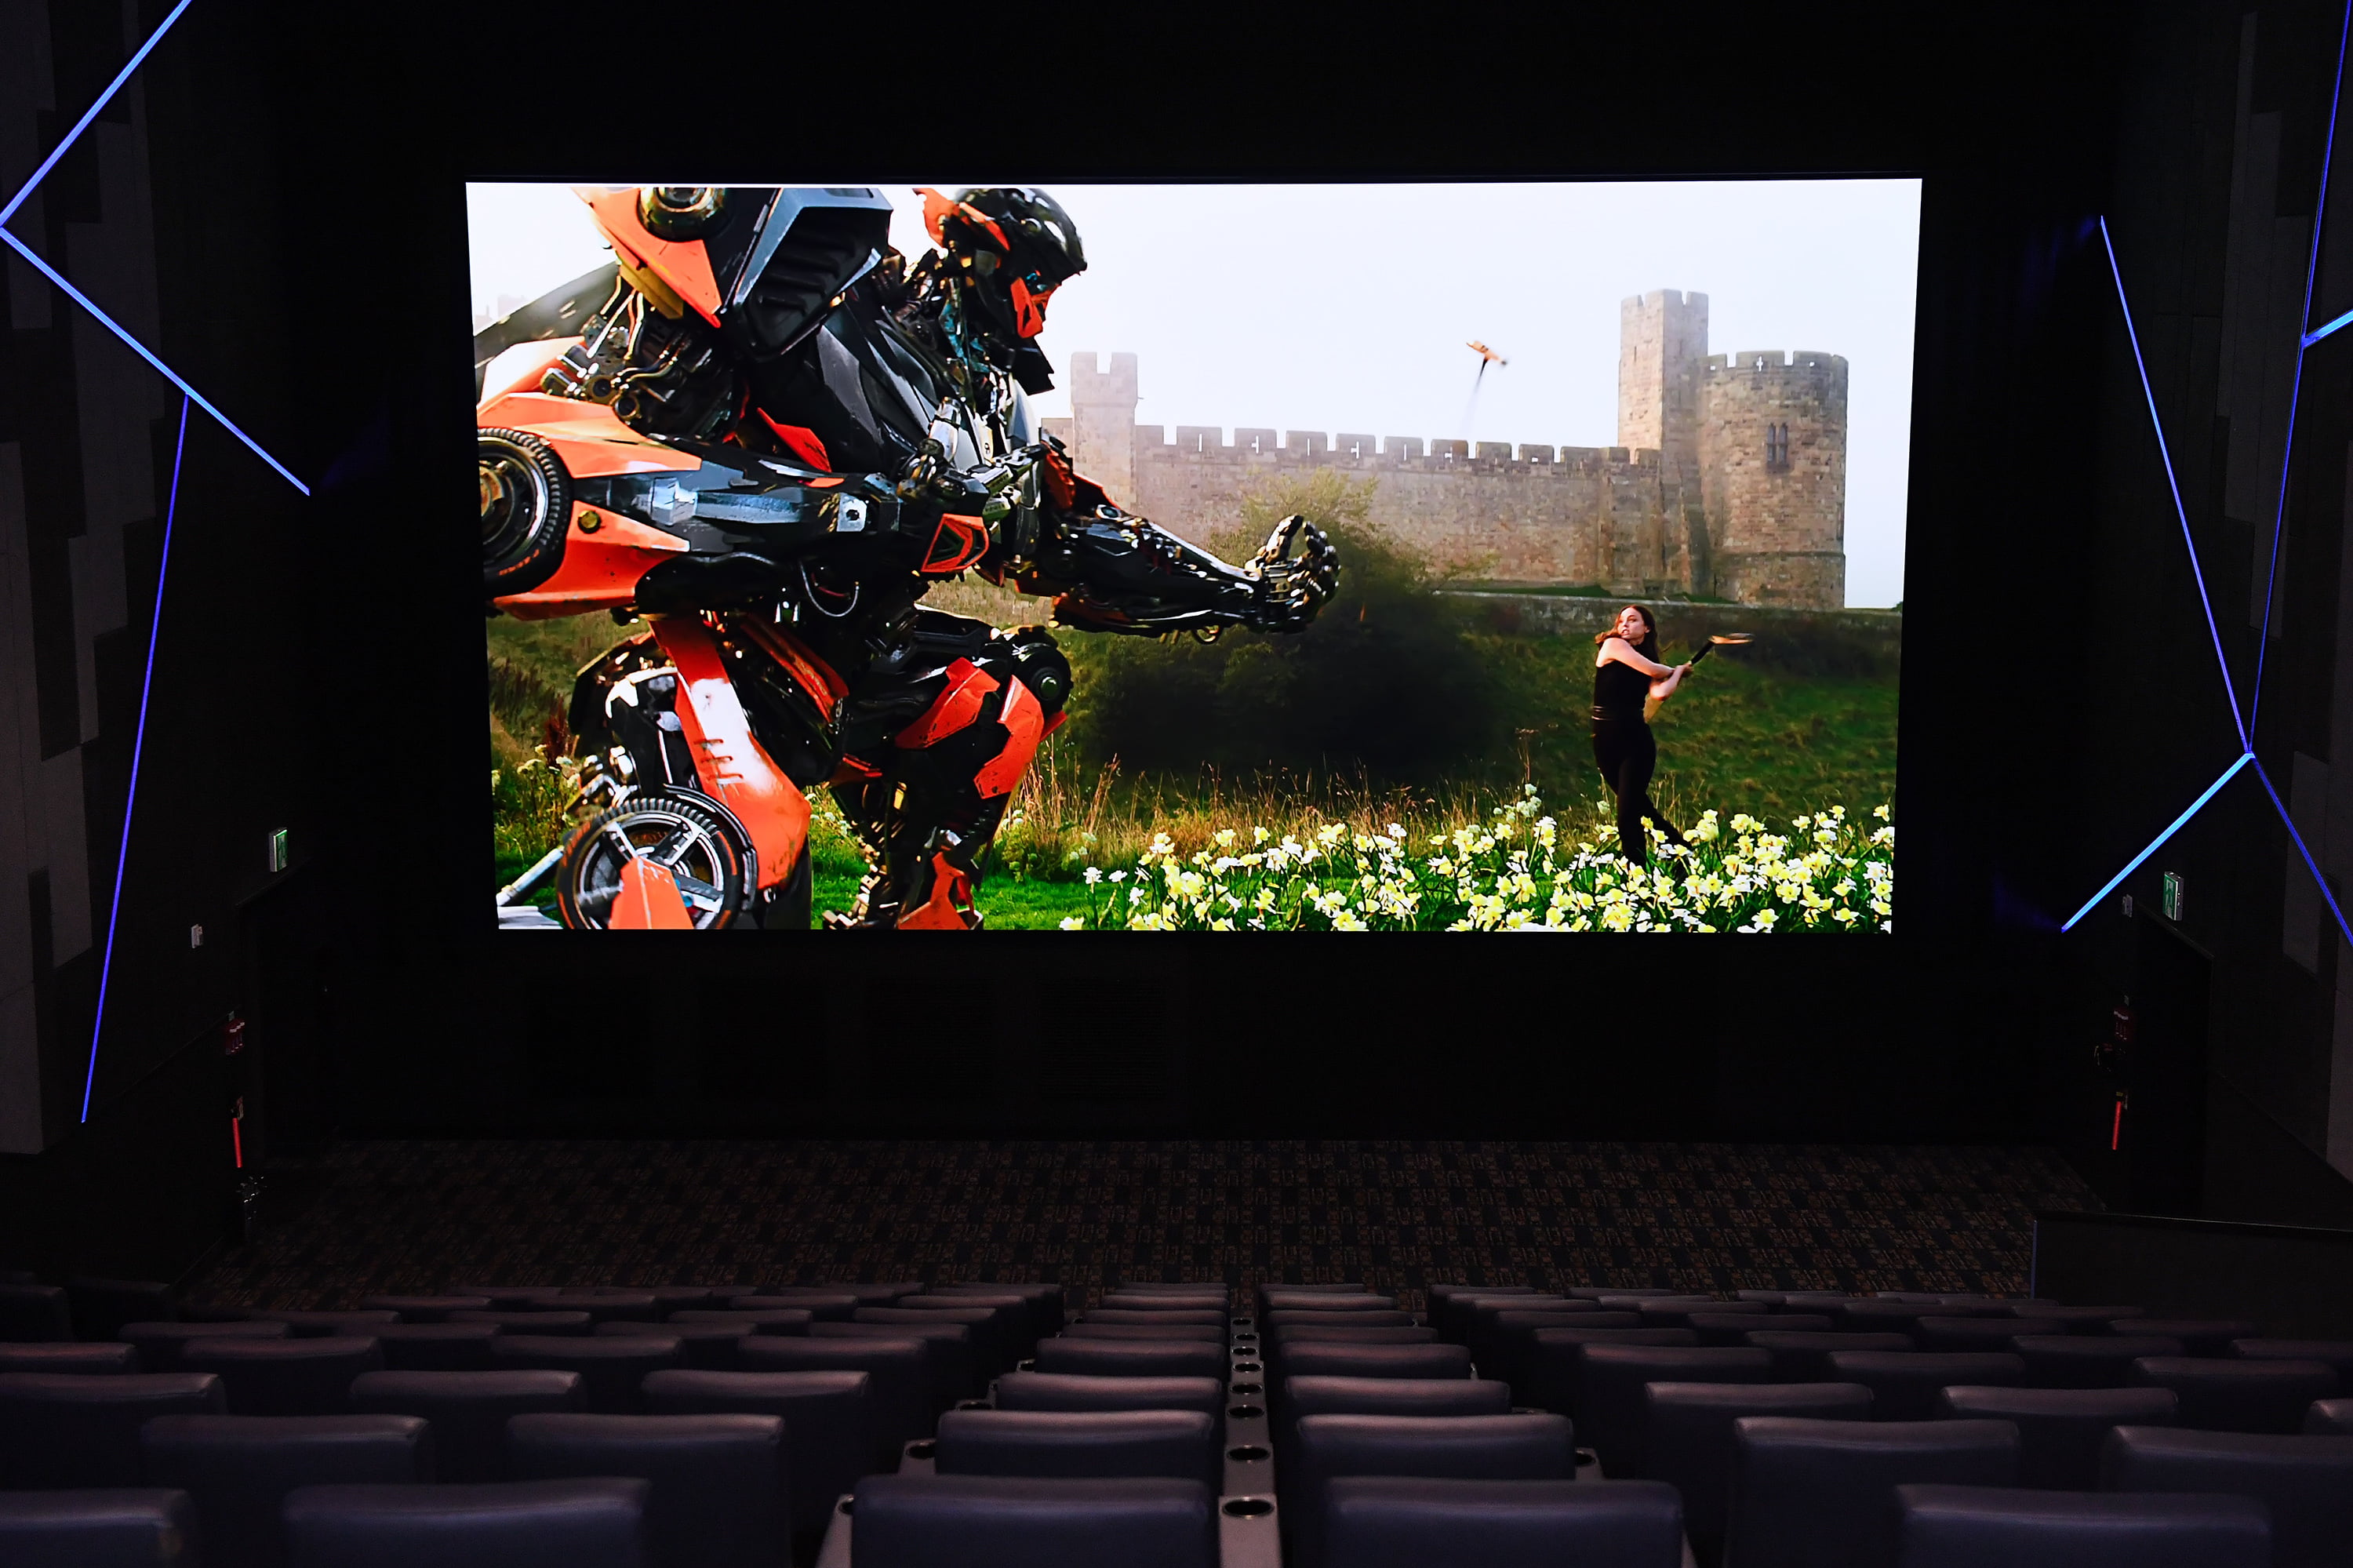 Samsung Cinema LED Screen 2